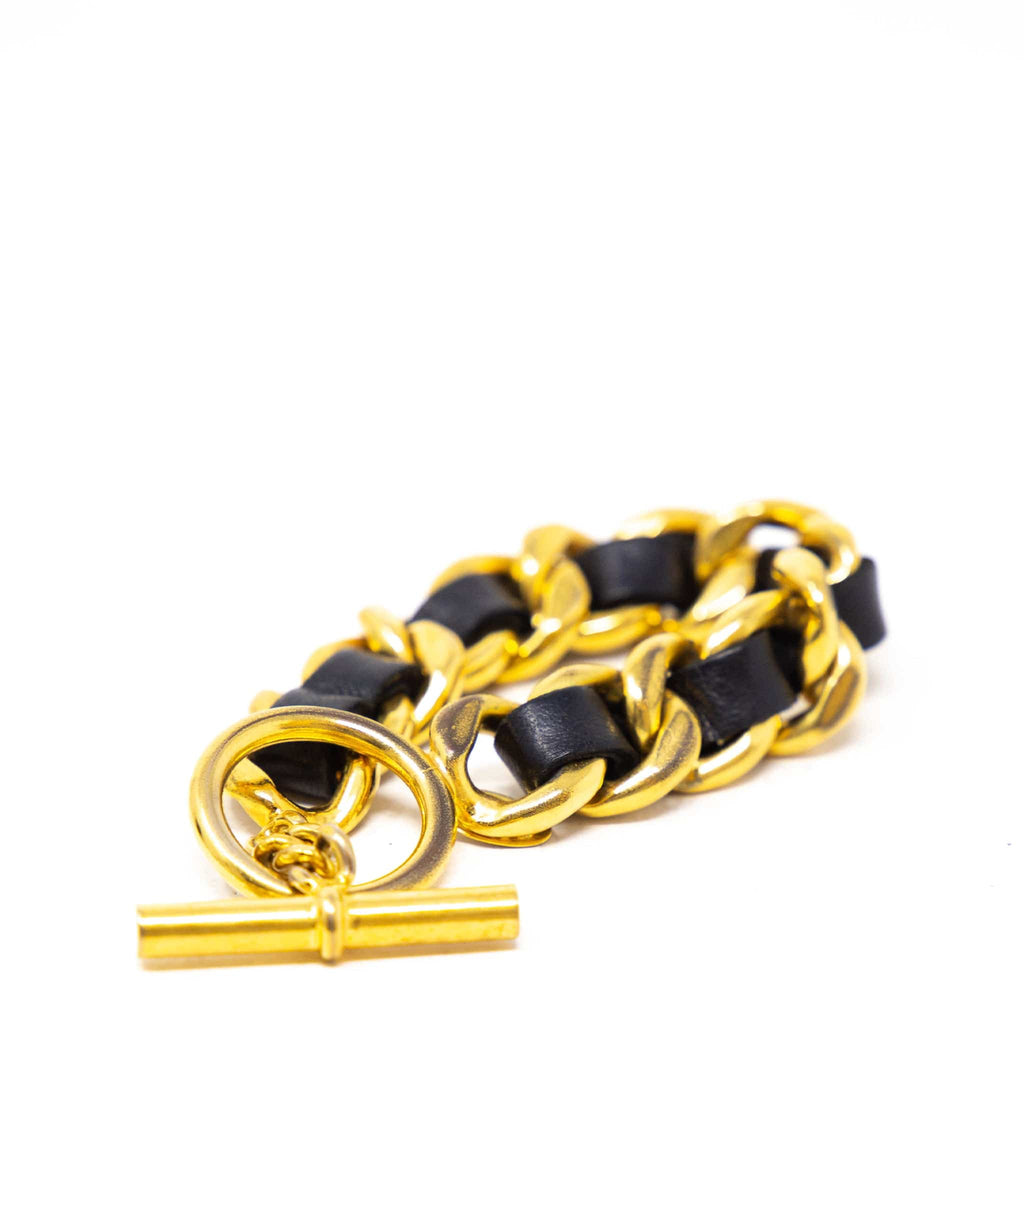 FWRD Renew Chanel Leather Chain Bangle in Black & Gold | FWRD